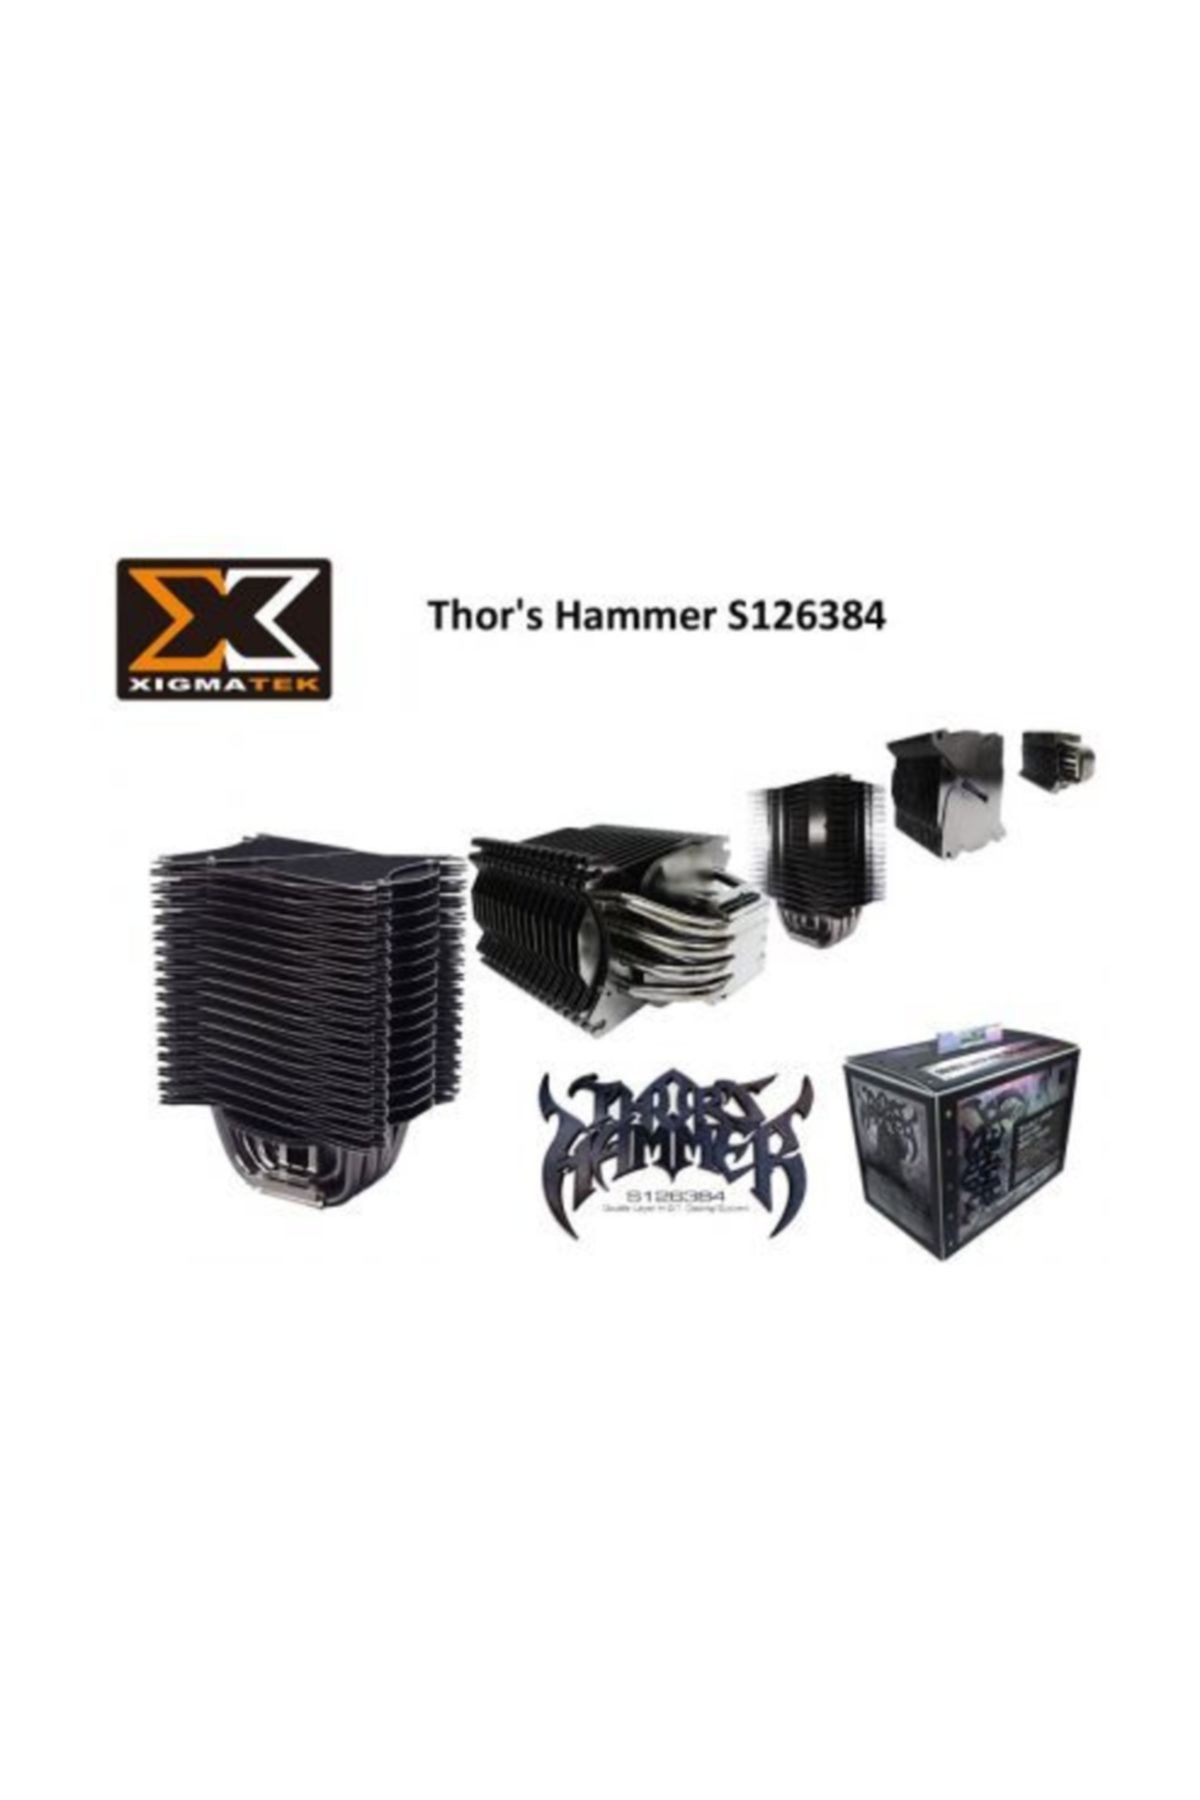 Xigmatek S126384 Thor'S Hammer Cpu Fan